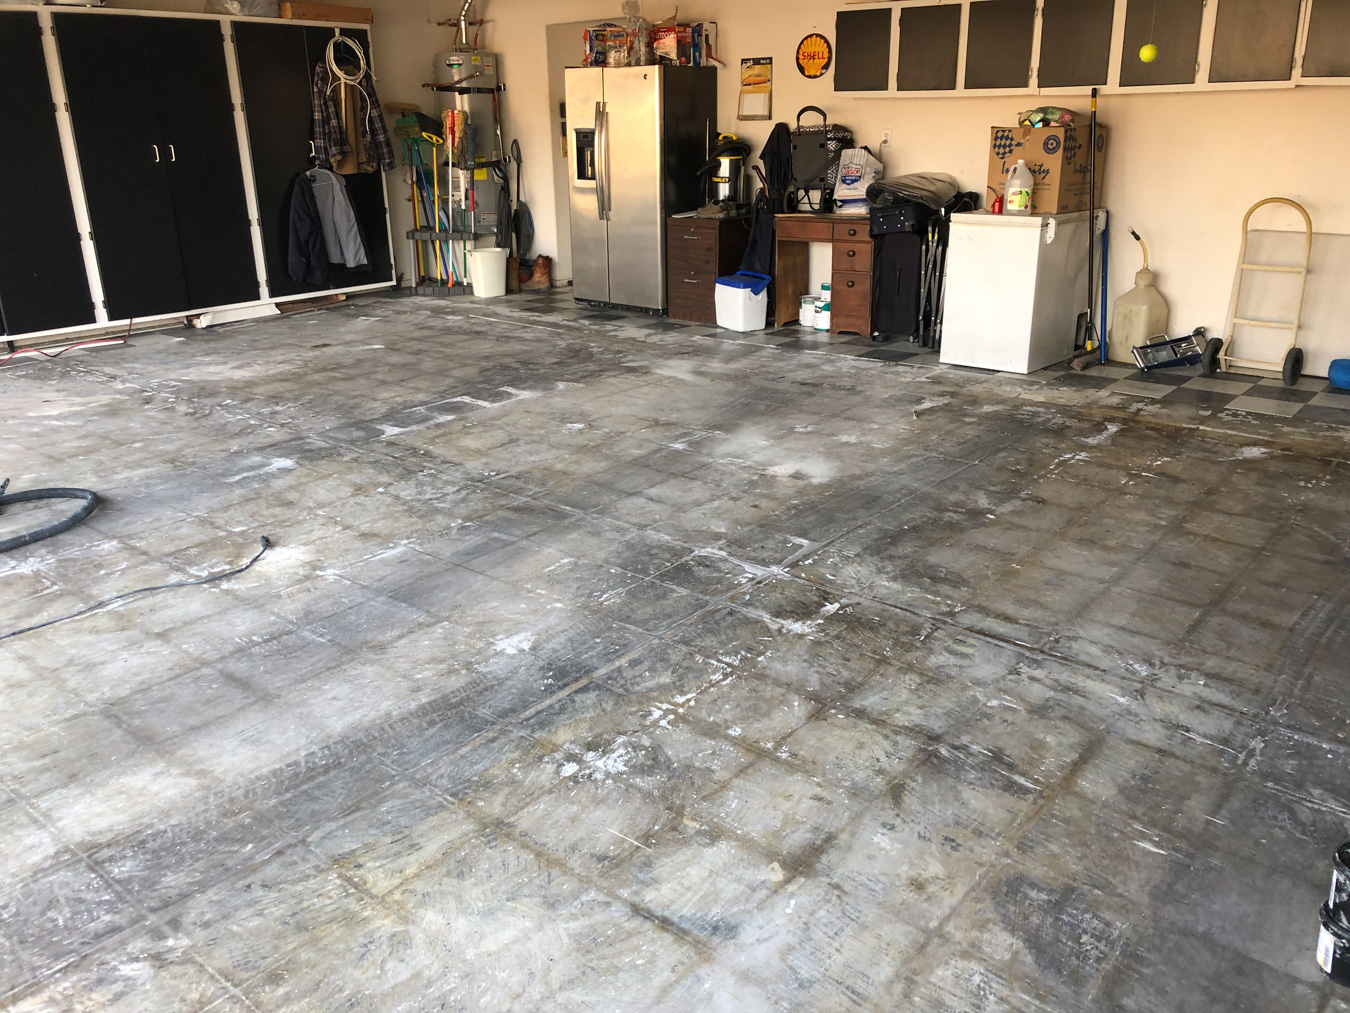 Rough Garage Floor Before Coating